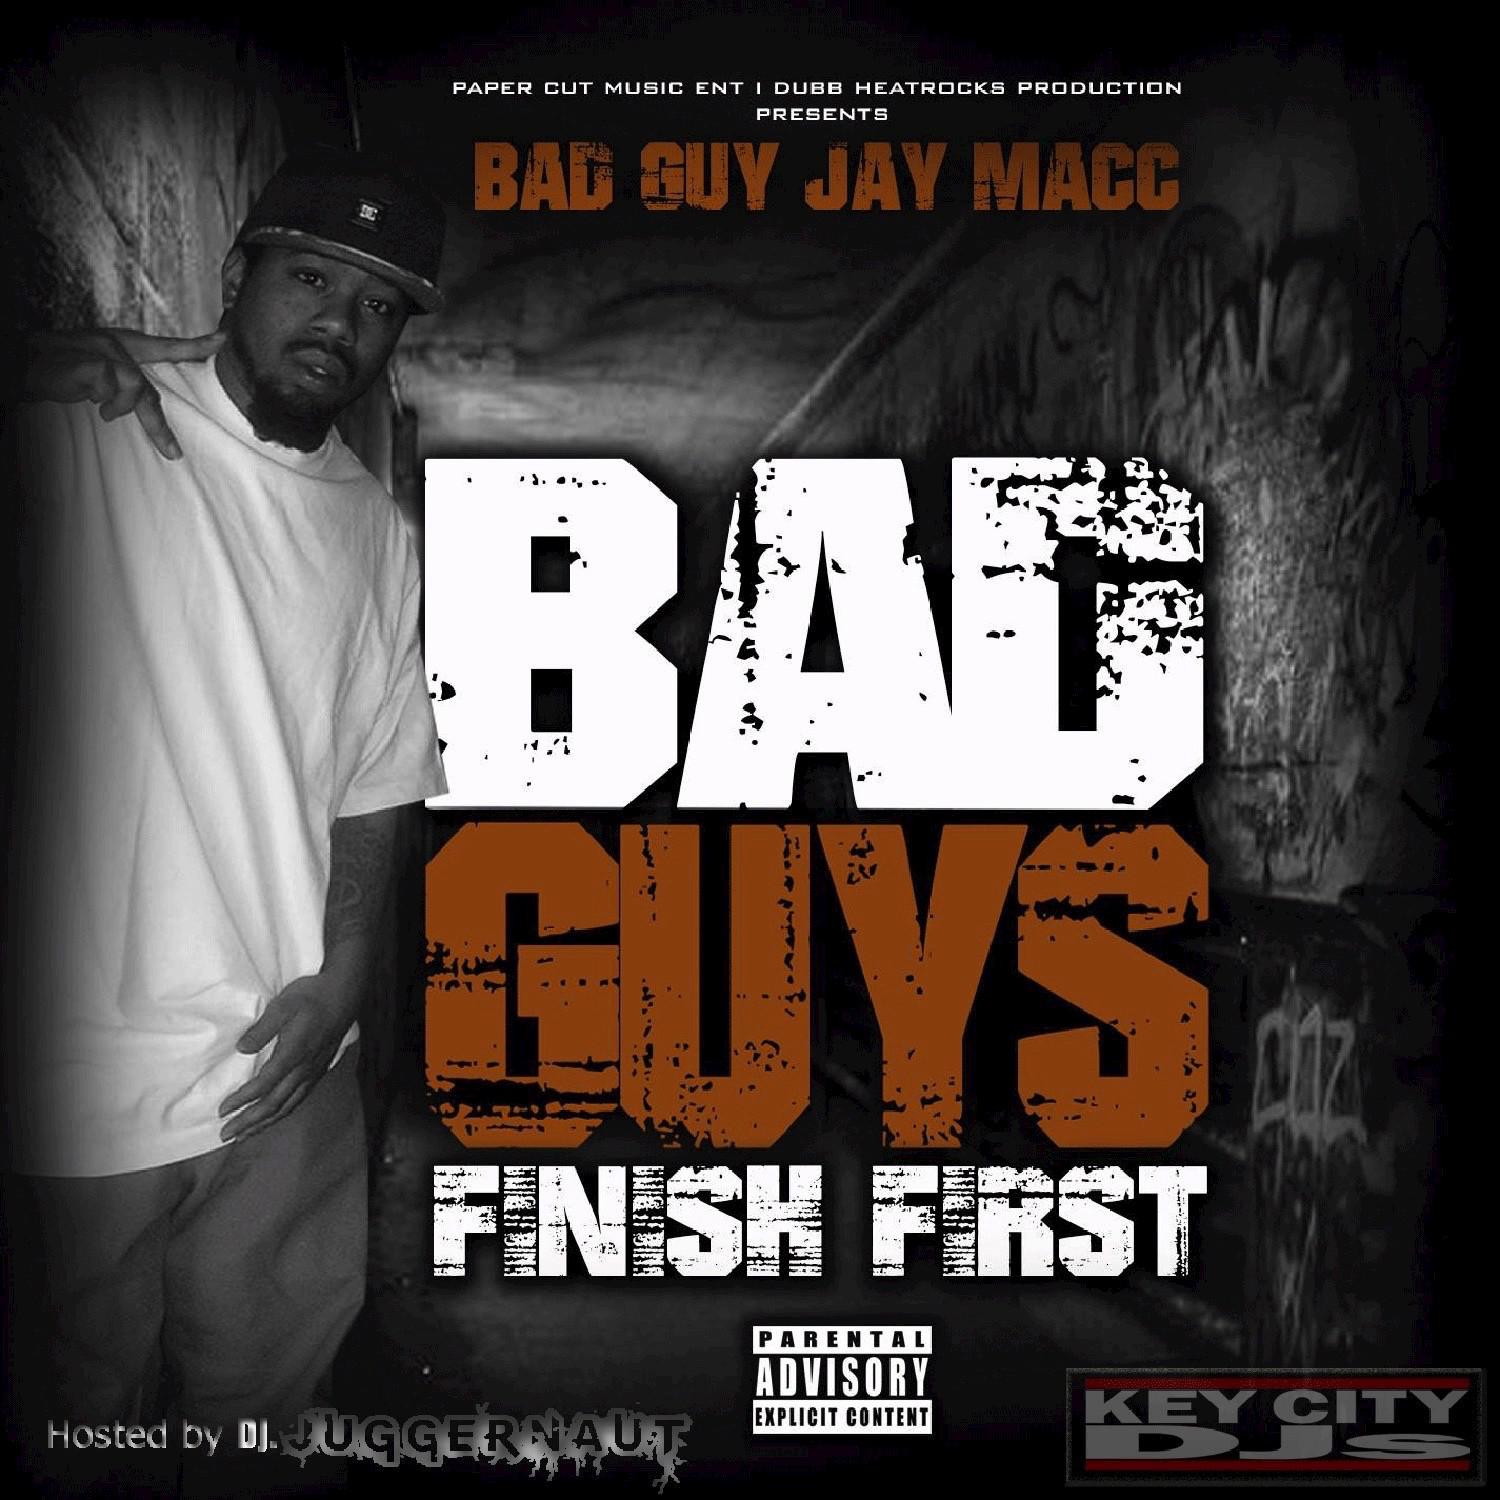 Bad Guys Finish First